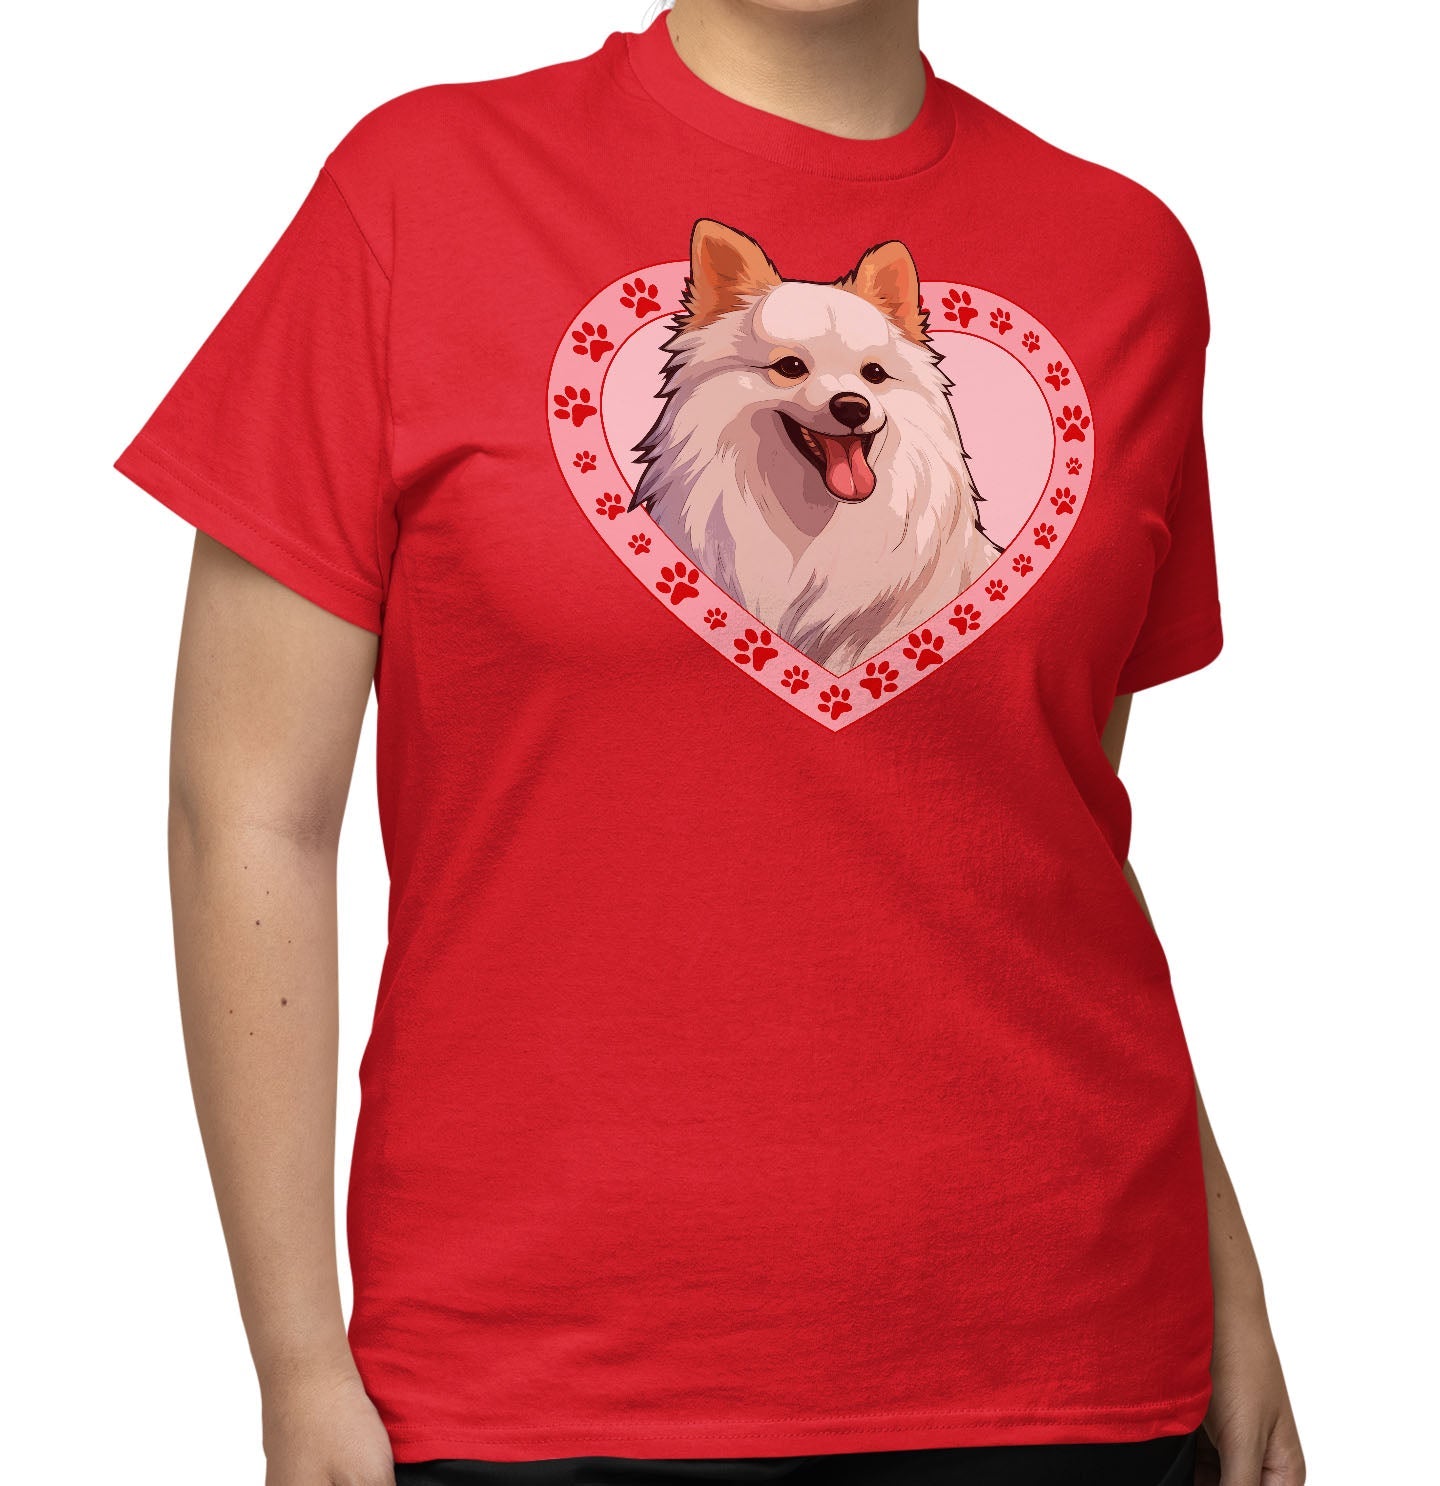 American Eskimo Dog Illustration In Heart - Adult Unisex T-Shirt